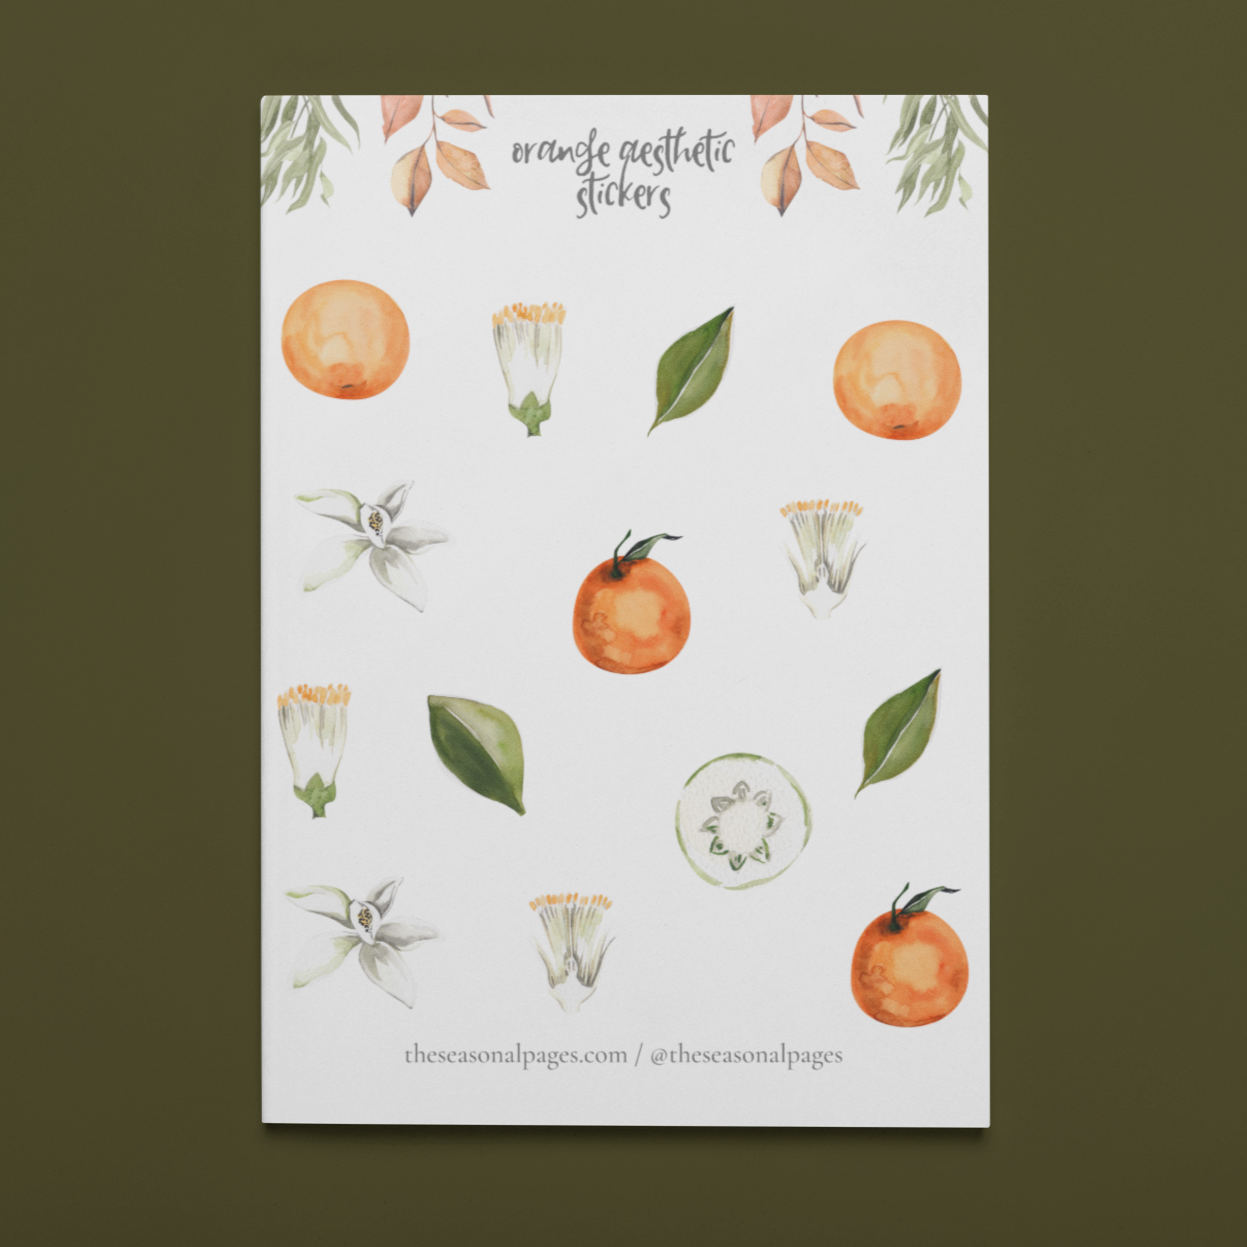 Printable Orange Aesthetic Sticker Set